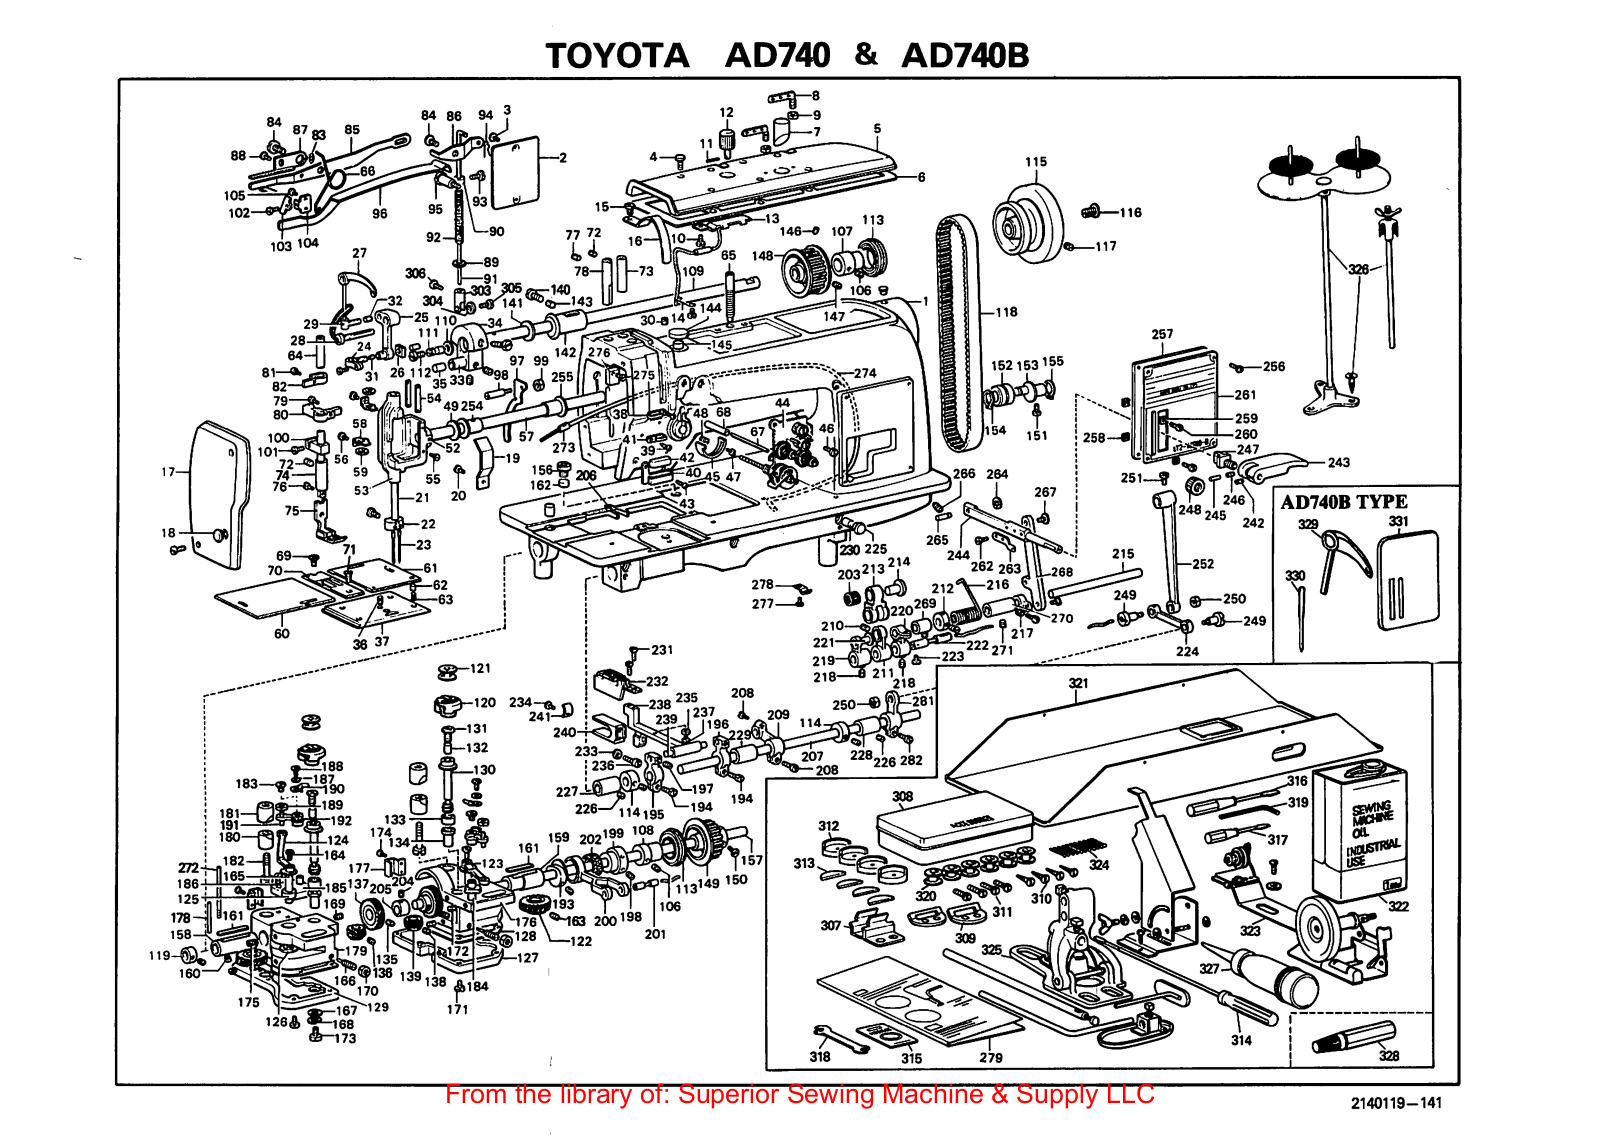 Toyota AD740, AD740B Manual